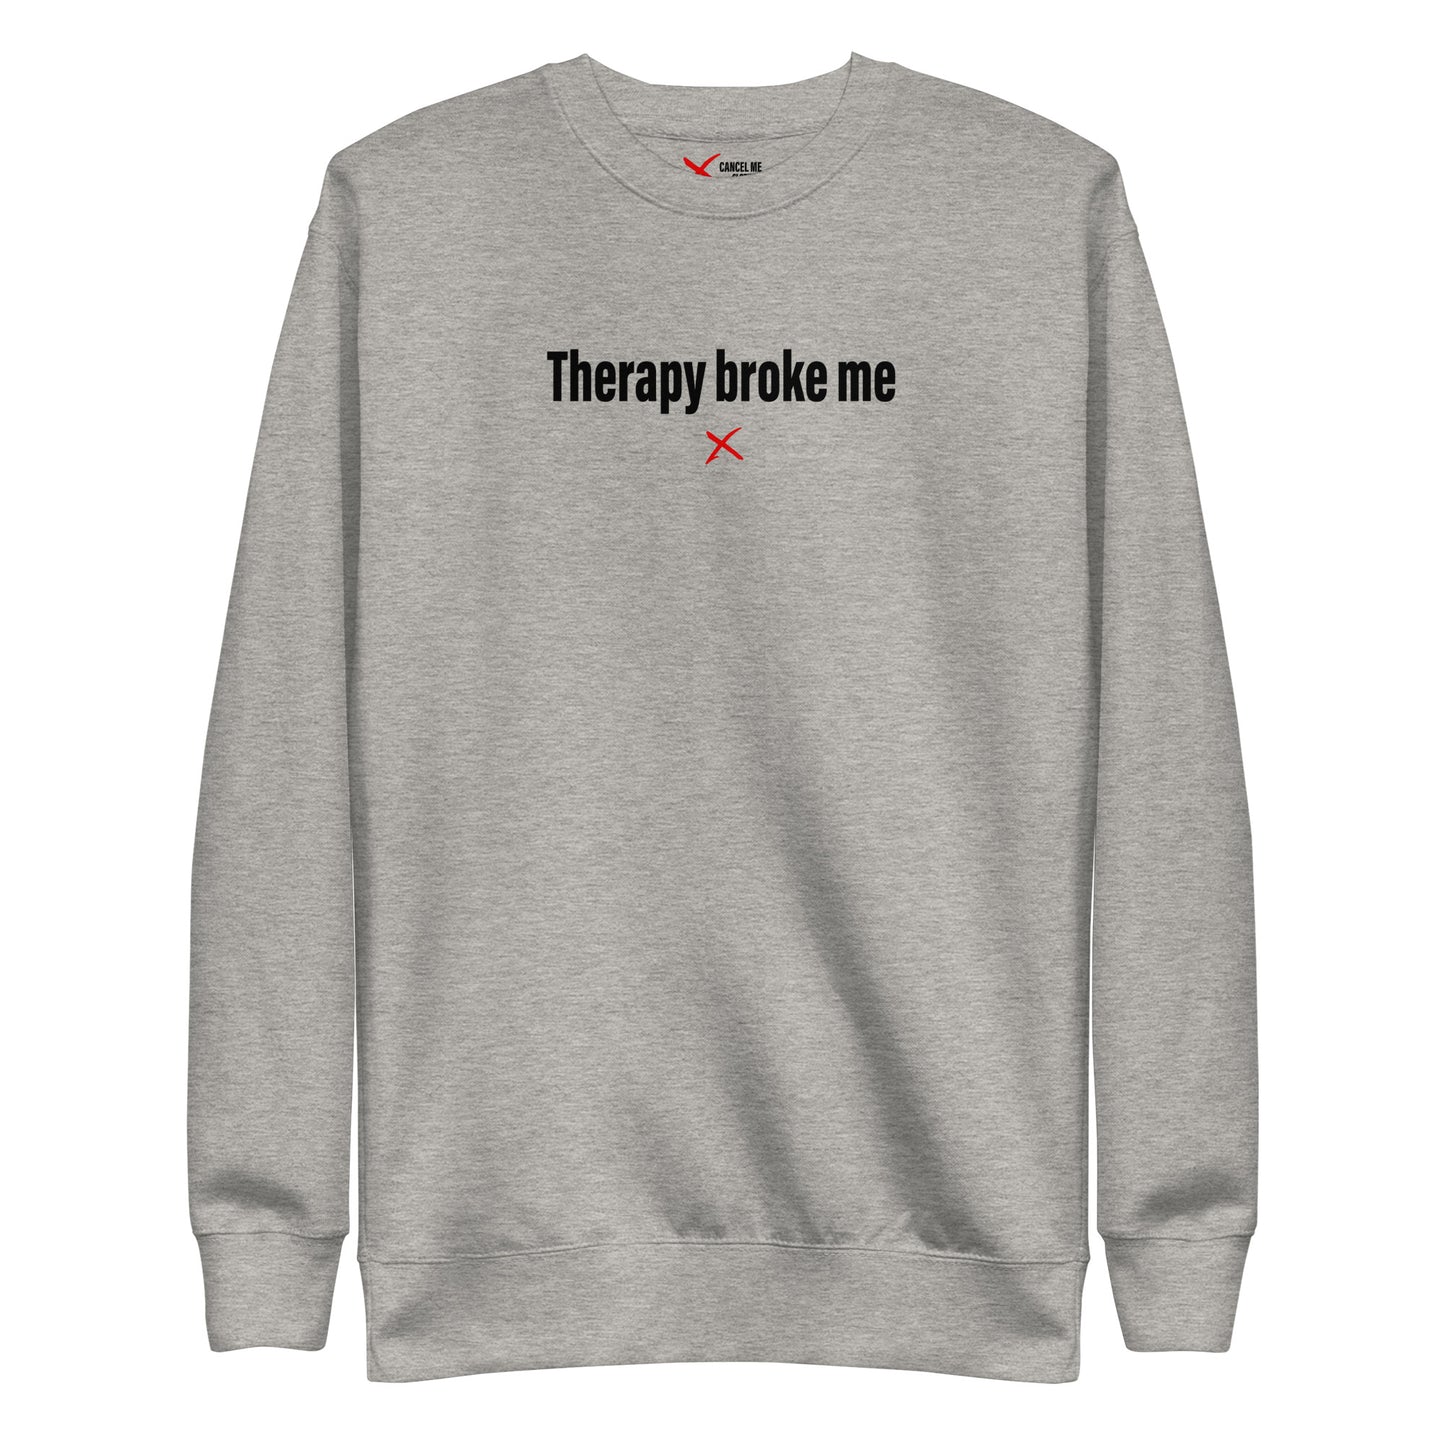 Therapy broke me - Sweatshirt